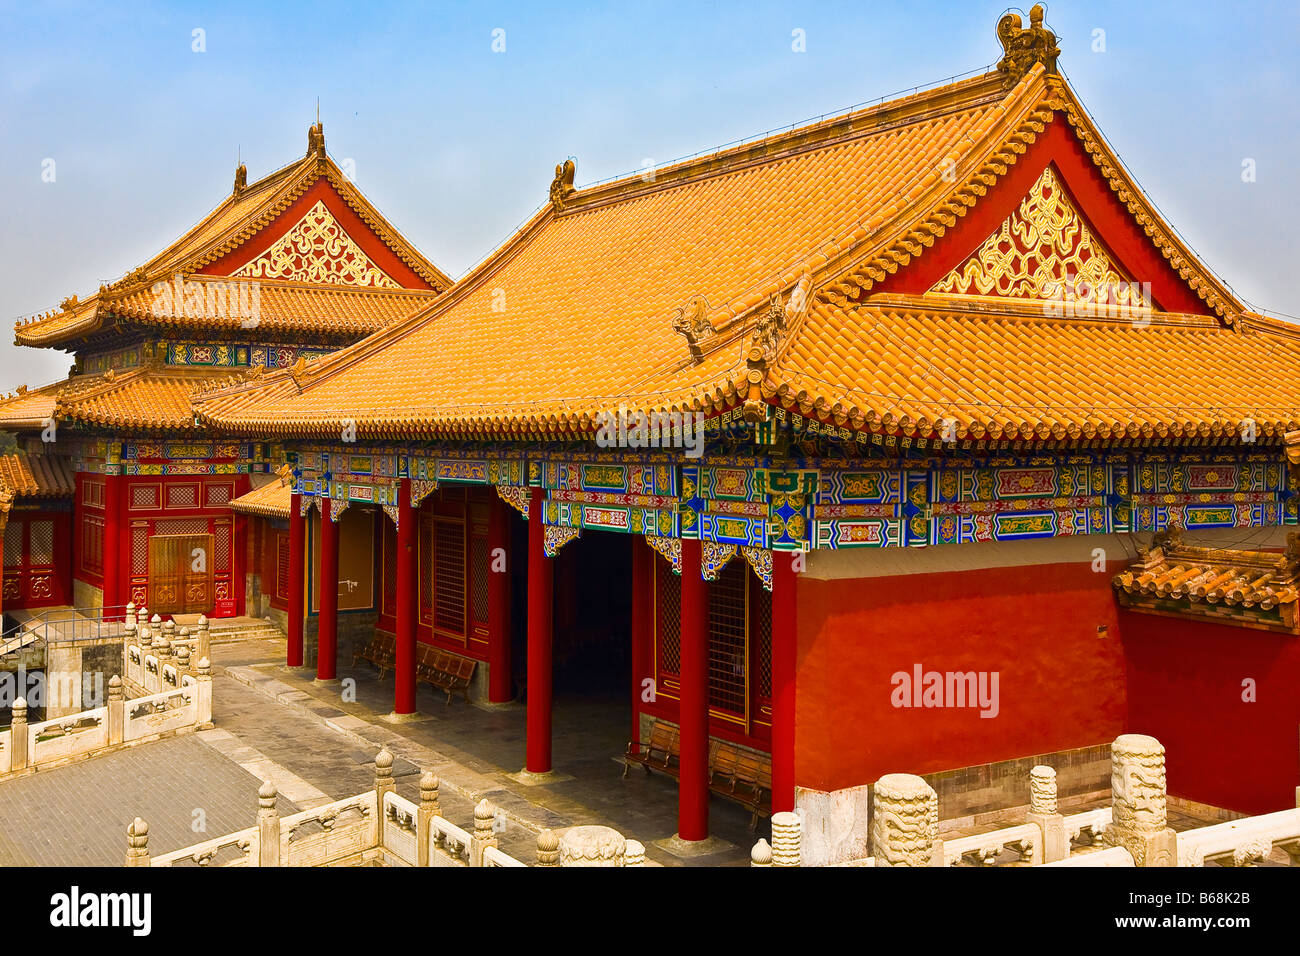 Facade of a palace, Forbidden City, Beijing, China Stock Photo